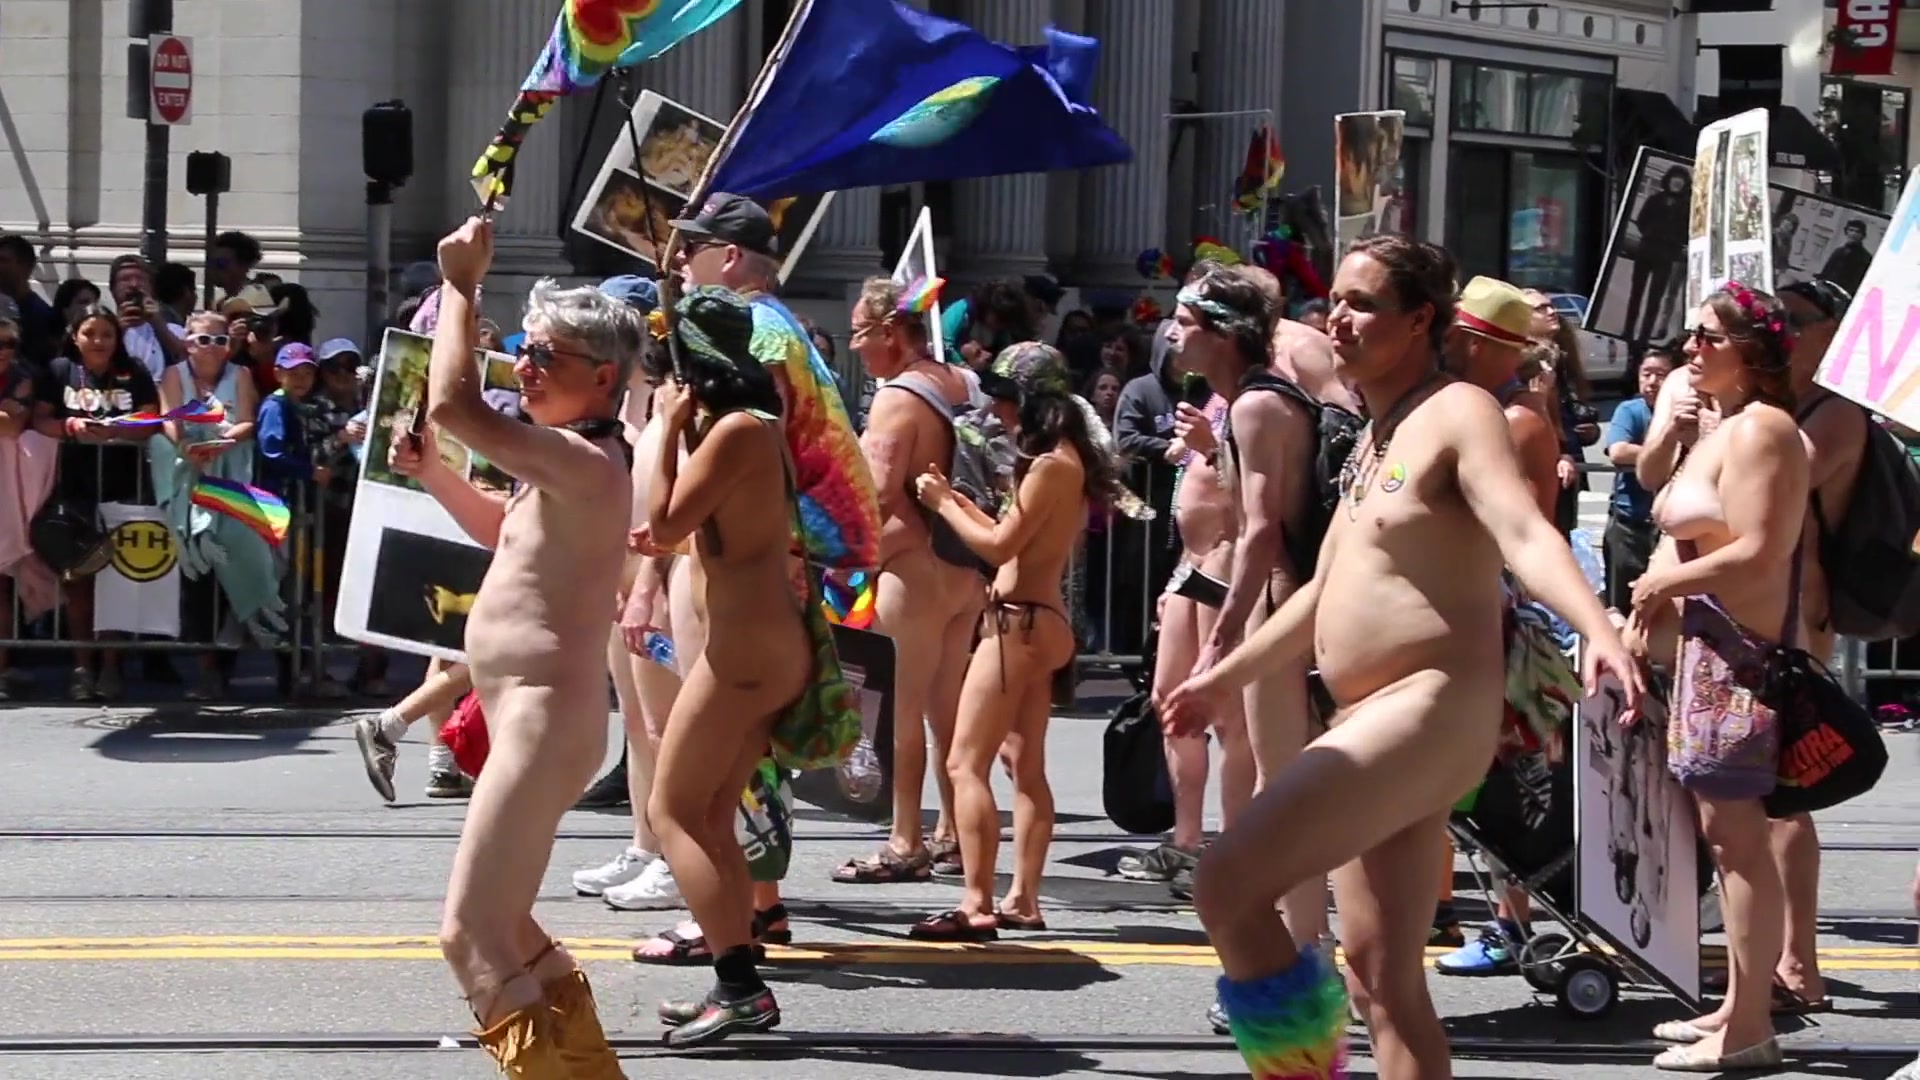 Summer Fun Dating Activities Nude Parade Video. 